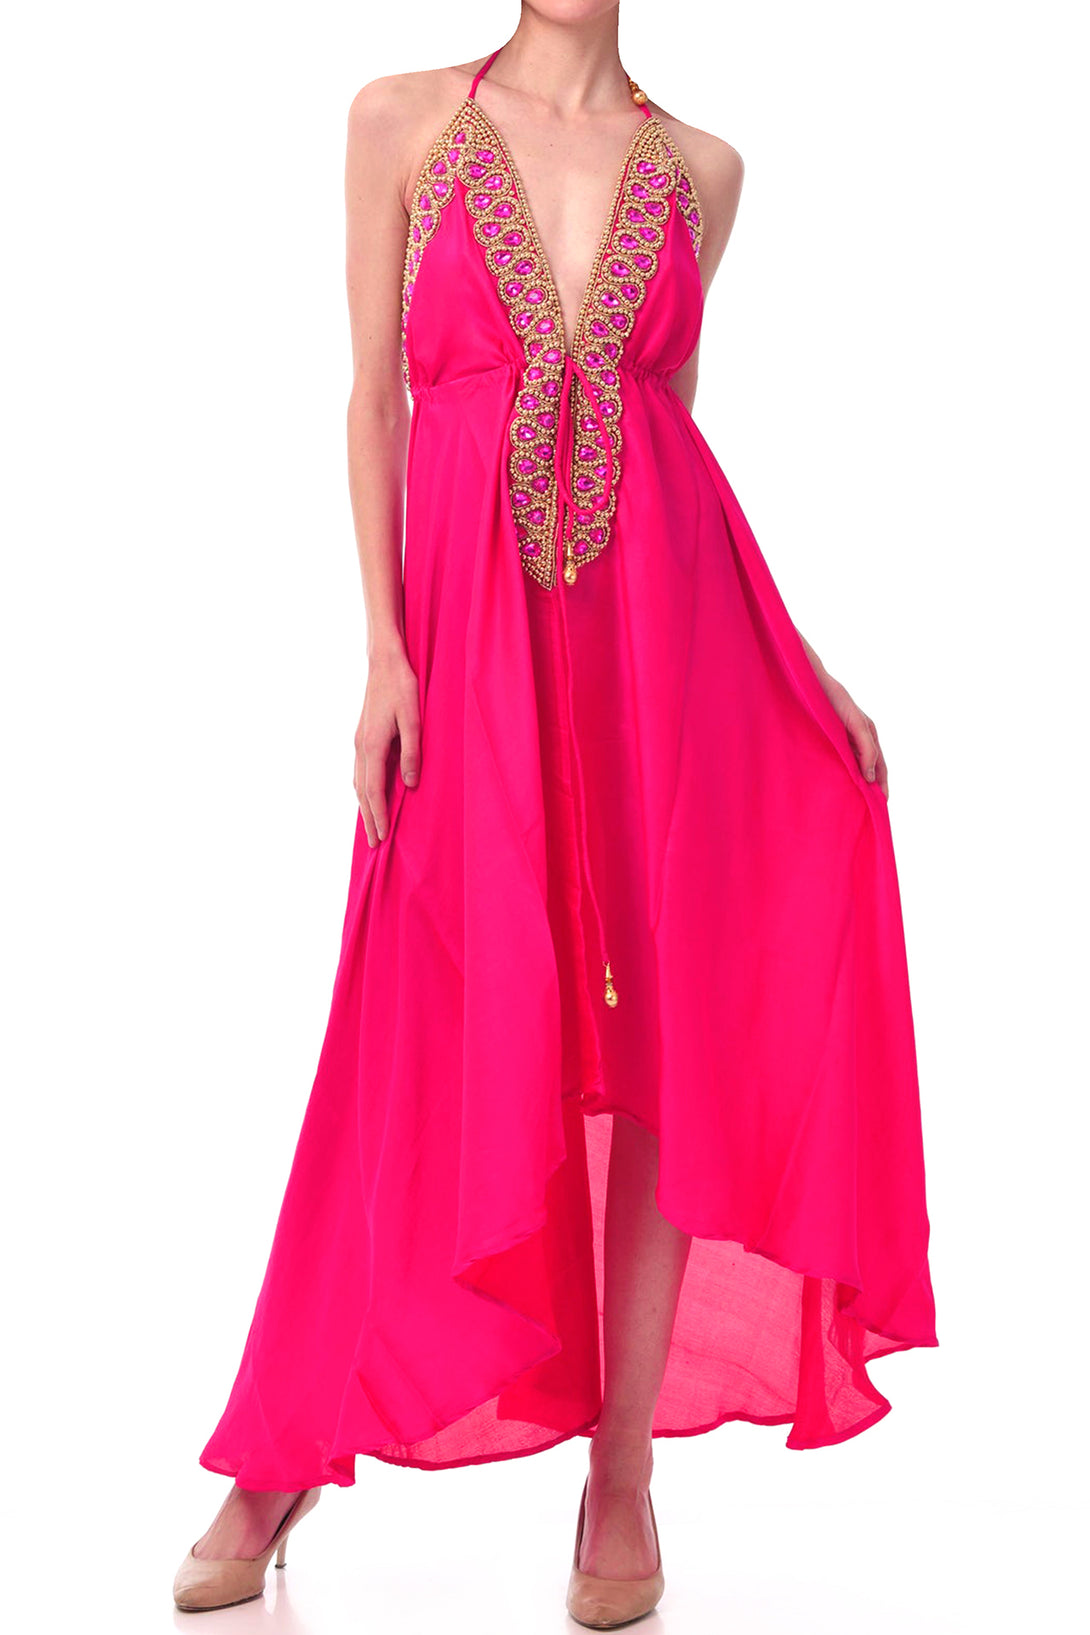  long dress pink colour, formal dresses for women, plunging neckline cocktail dress,